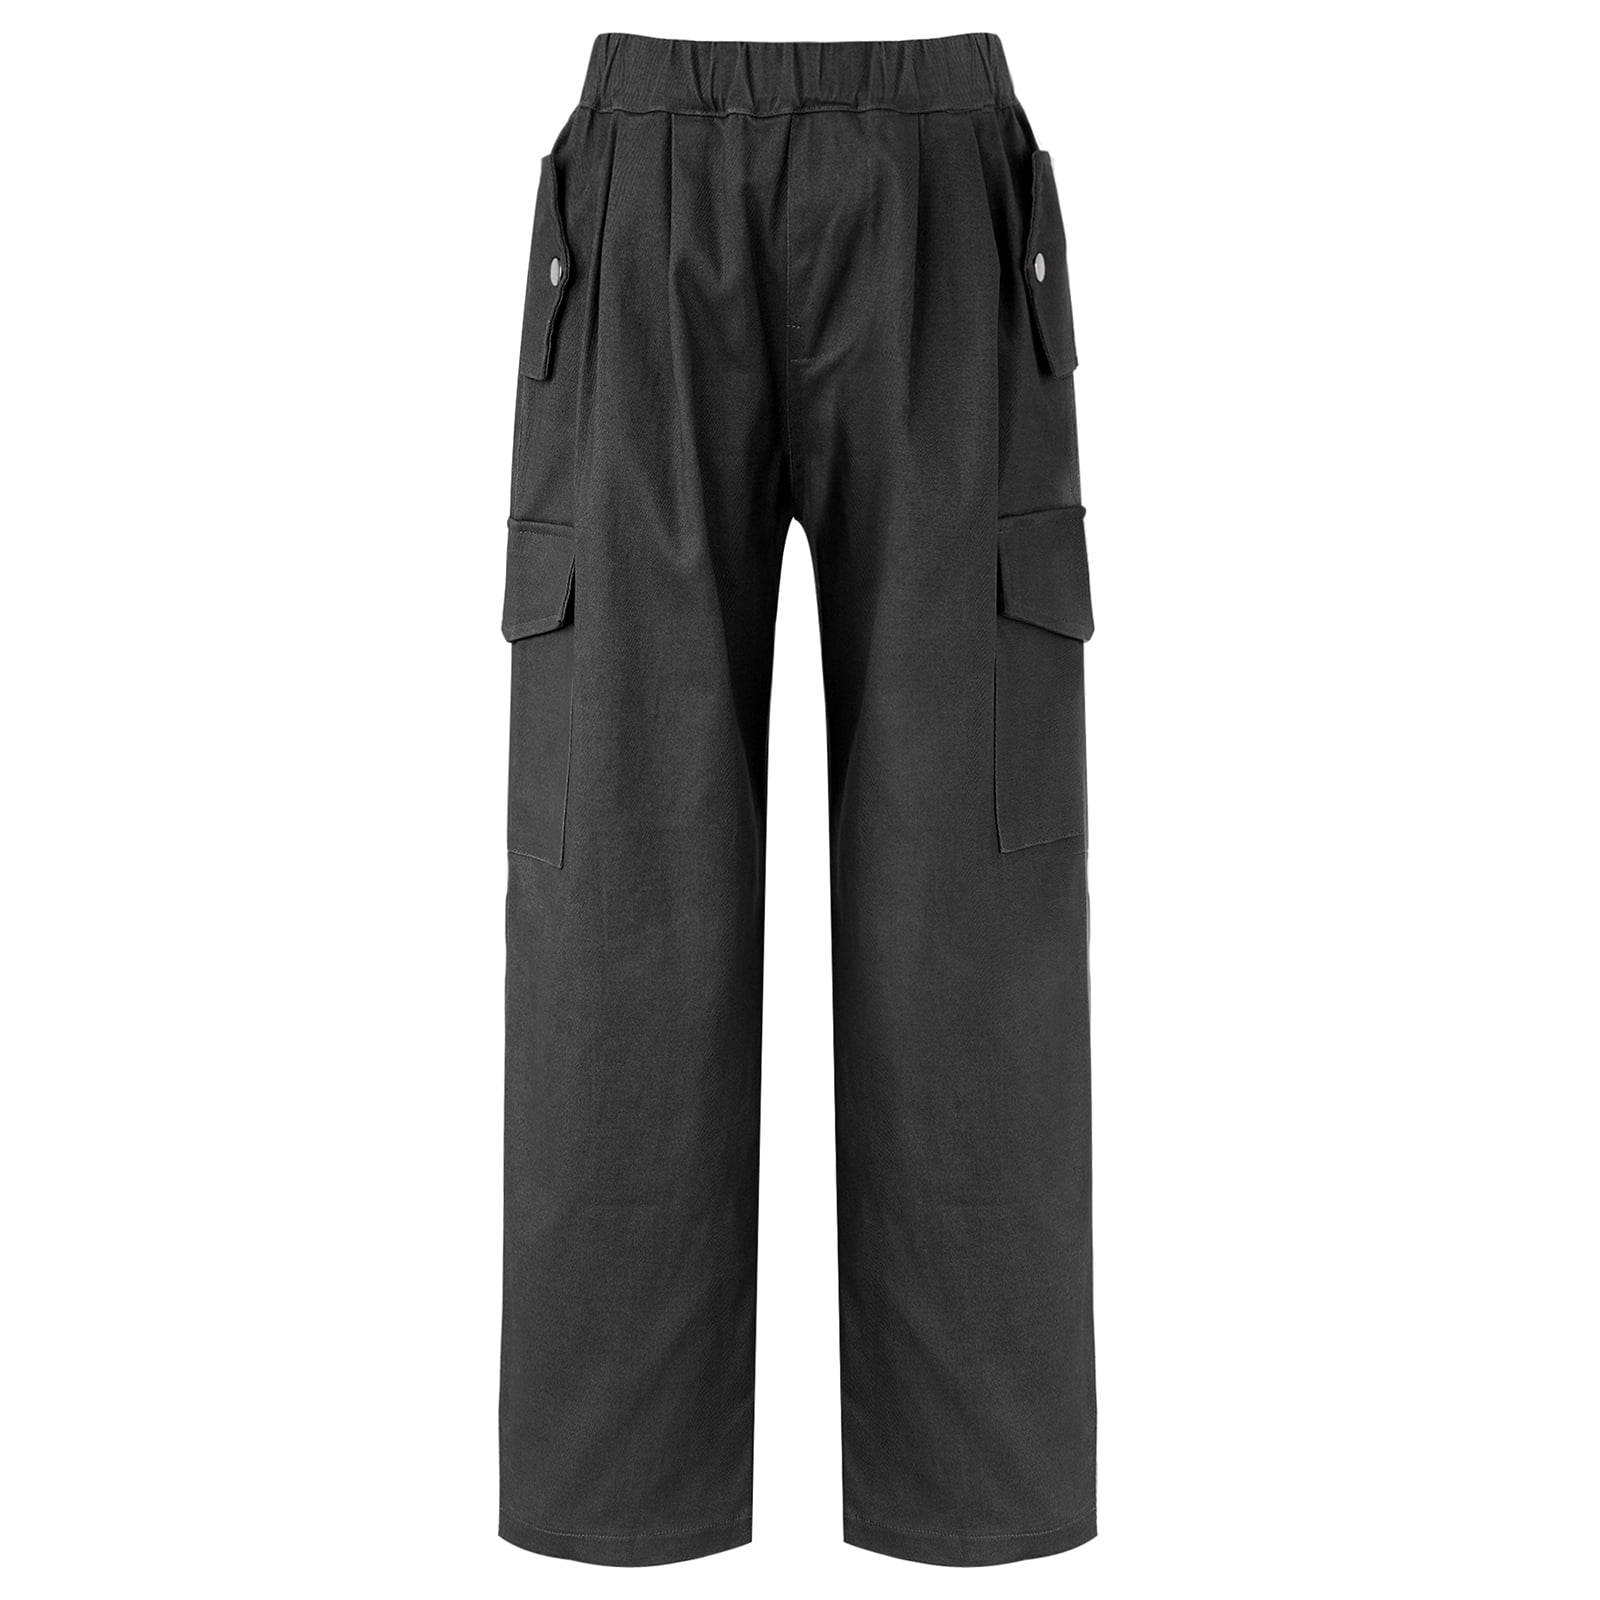 inhzoy Kids Girls Cargo Jogger Pants 4 Pockets Cotton Fashion Bottoms with  Drawstring Black 14